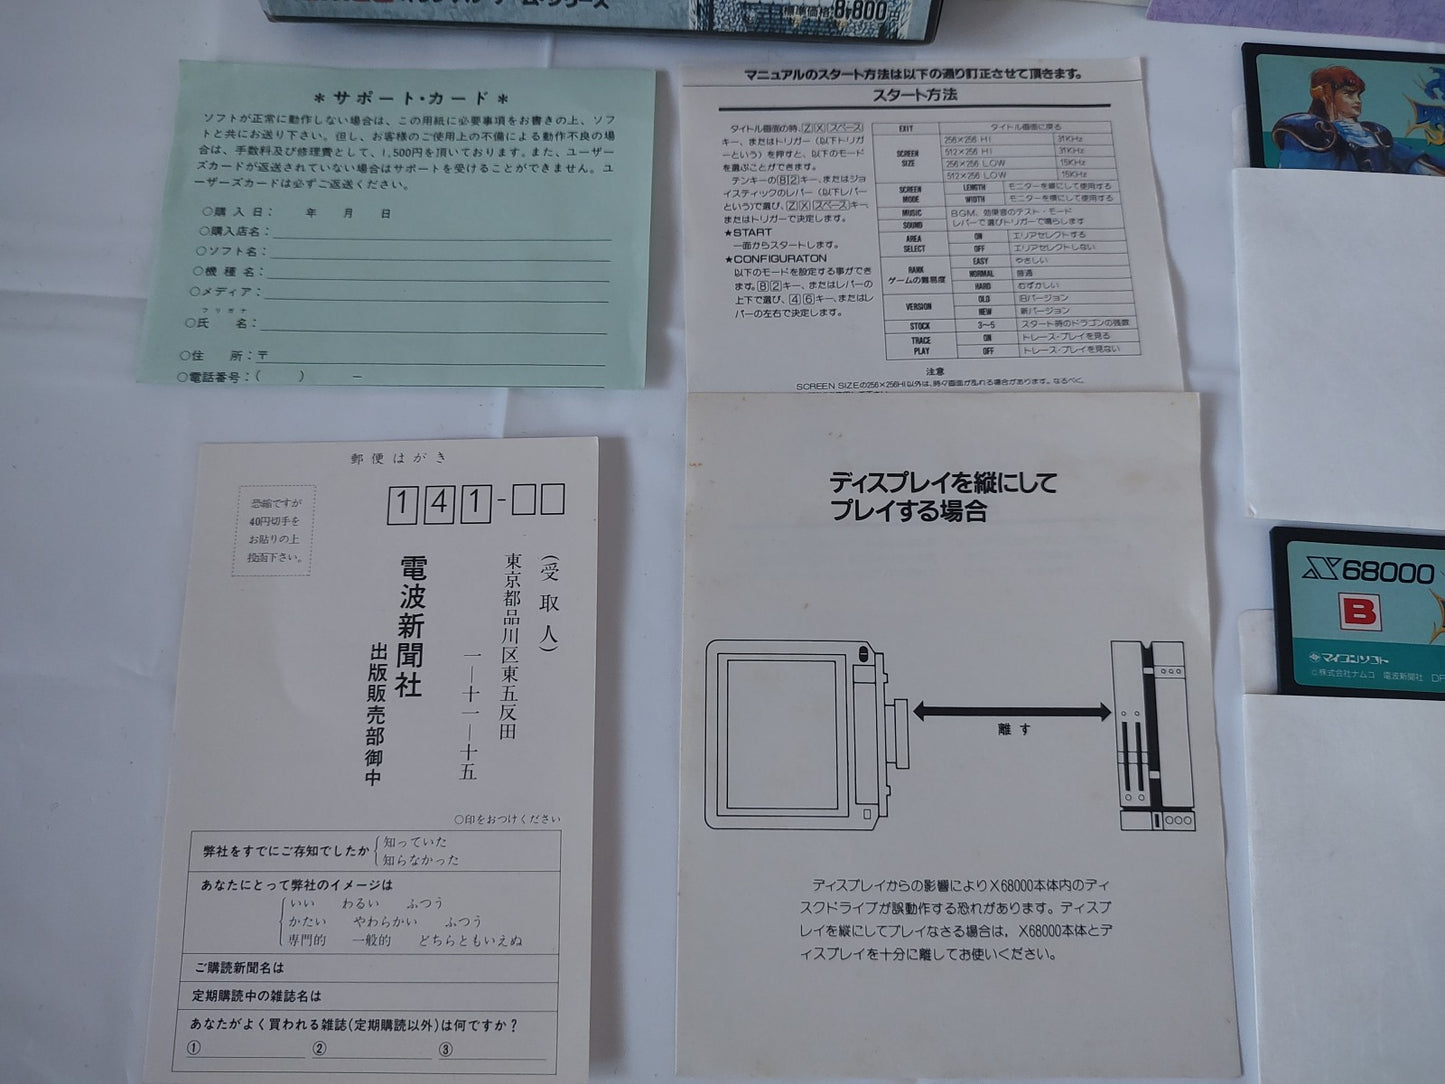 Dragon Spirit SHARP X68000 Game Gamedisk, Manual and Box set, Tested-e1103-